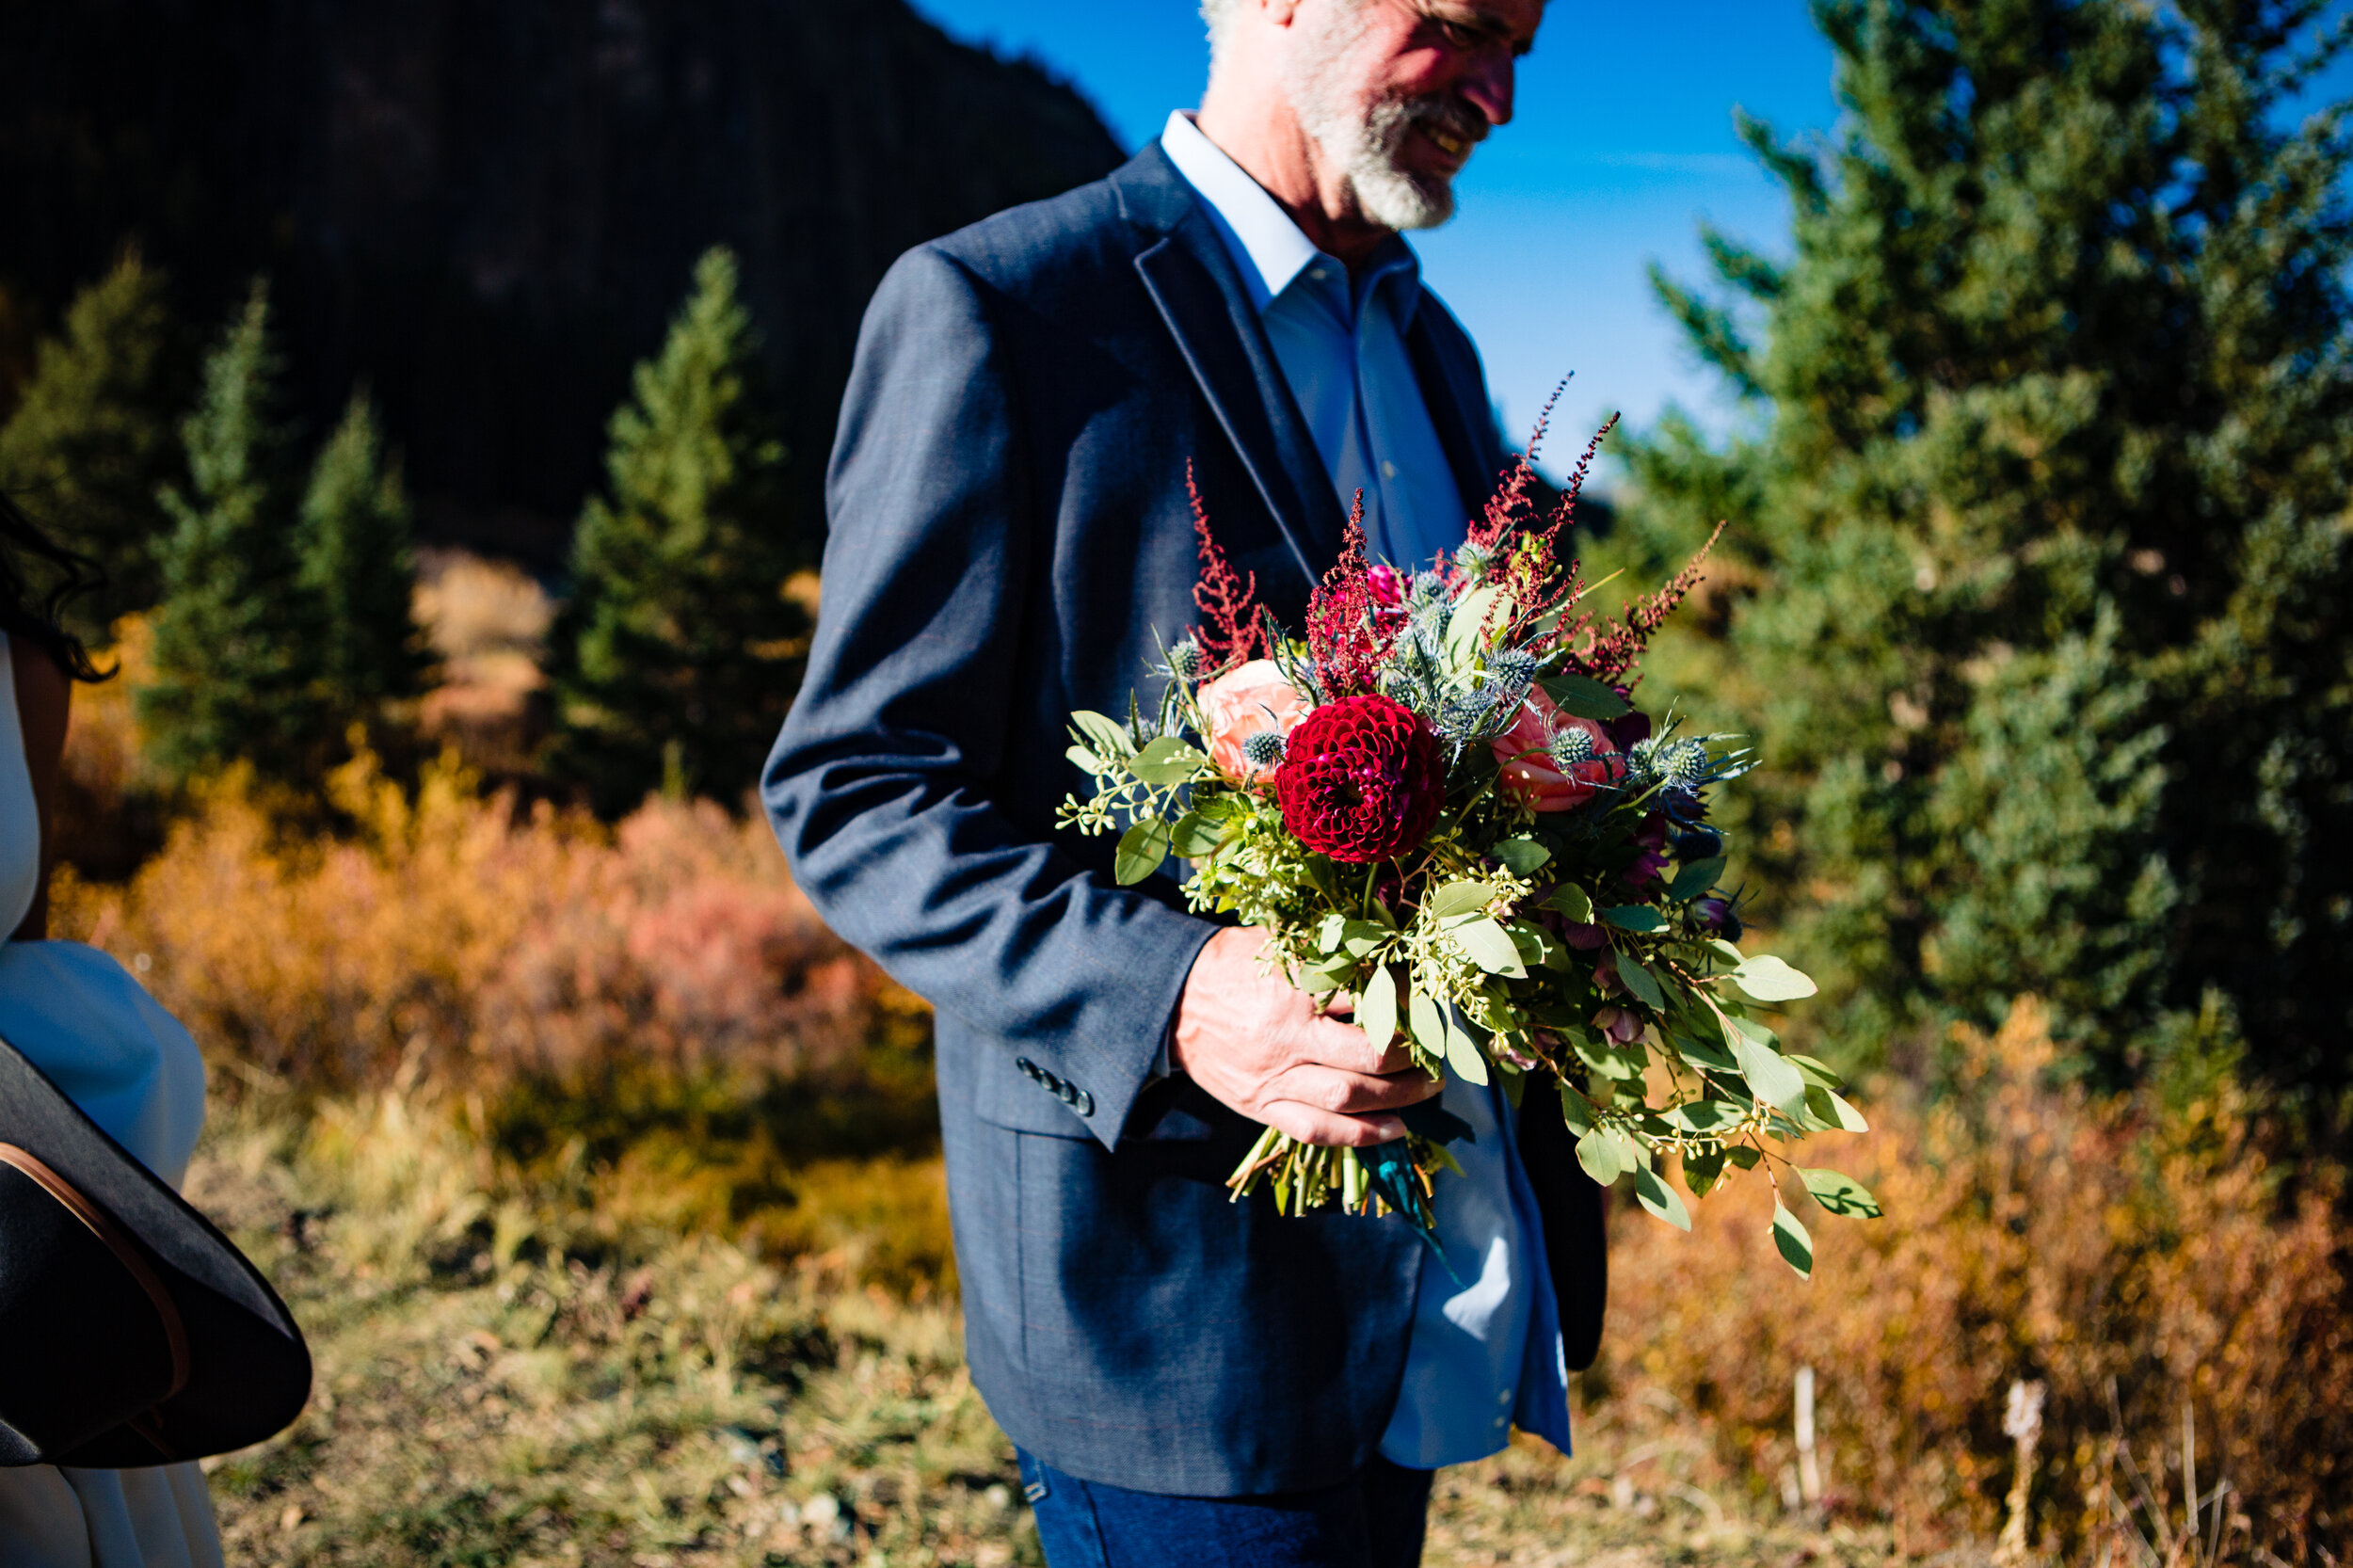  Crystal Lake, Ouray  Fall wedding  Ouray, Colorado  Red Mountain Pass Elopement  ©Alexi Hubbell Photography 2020 